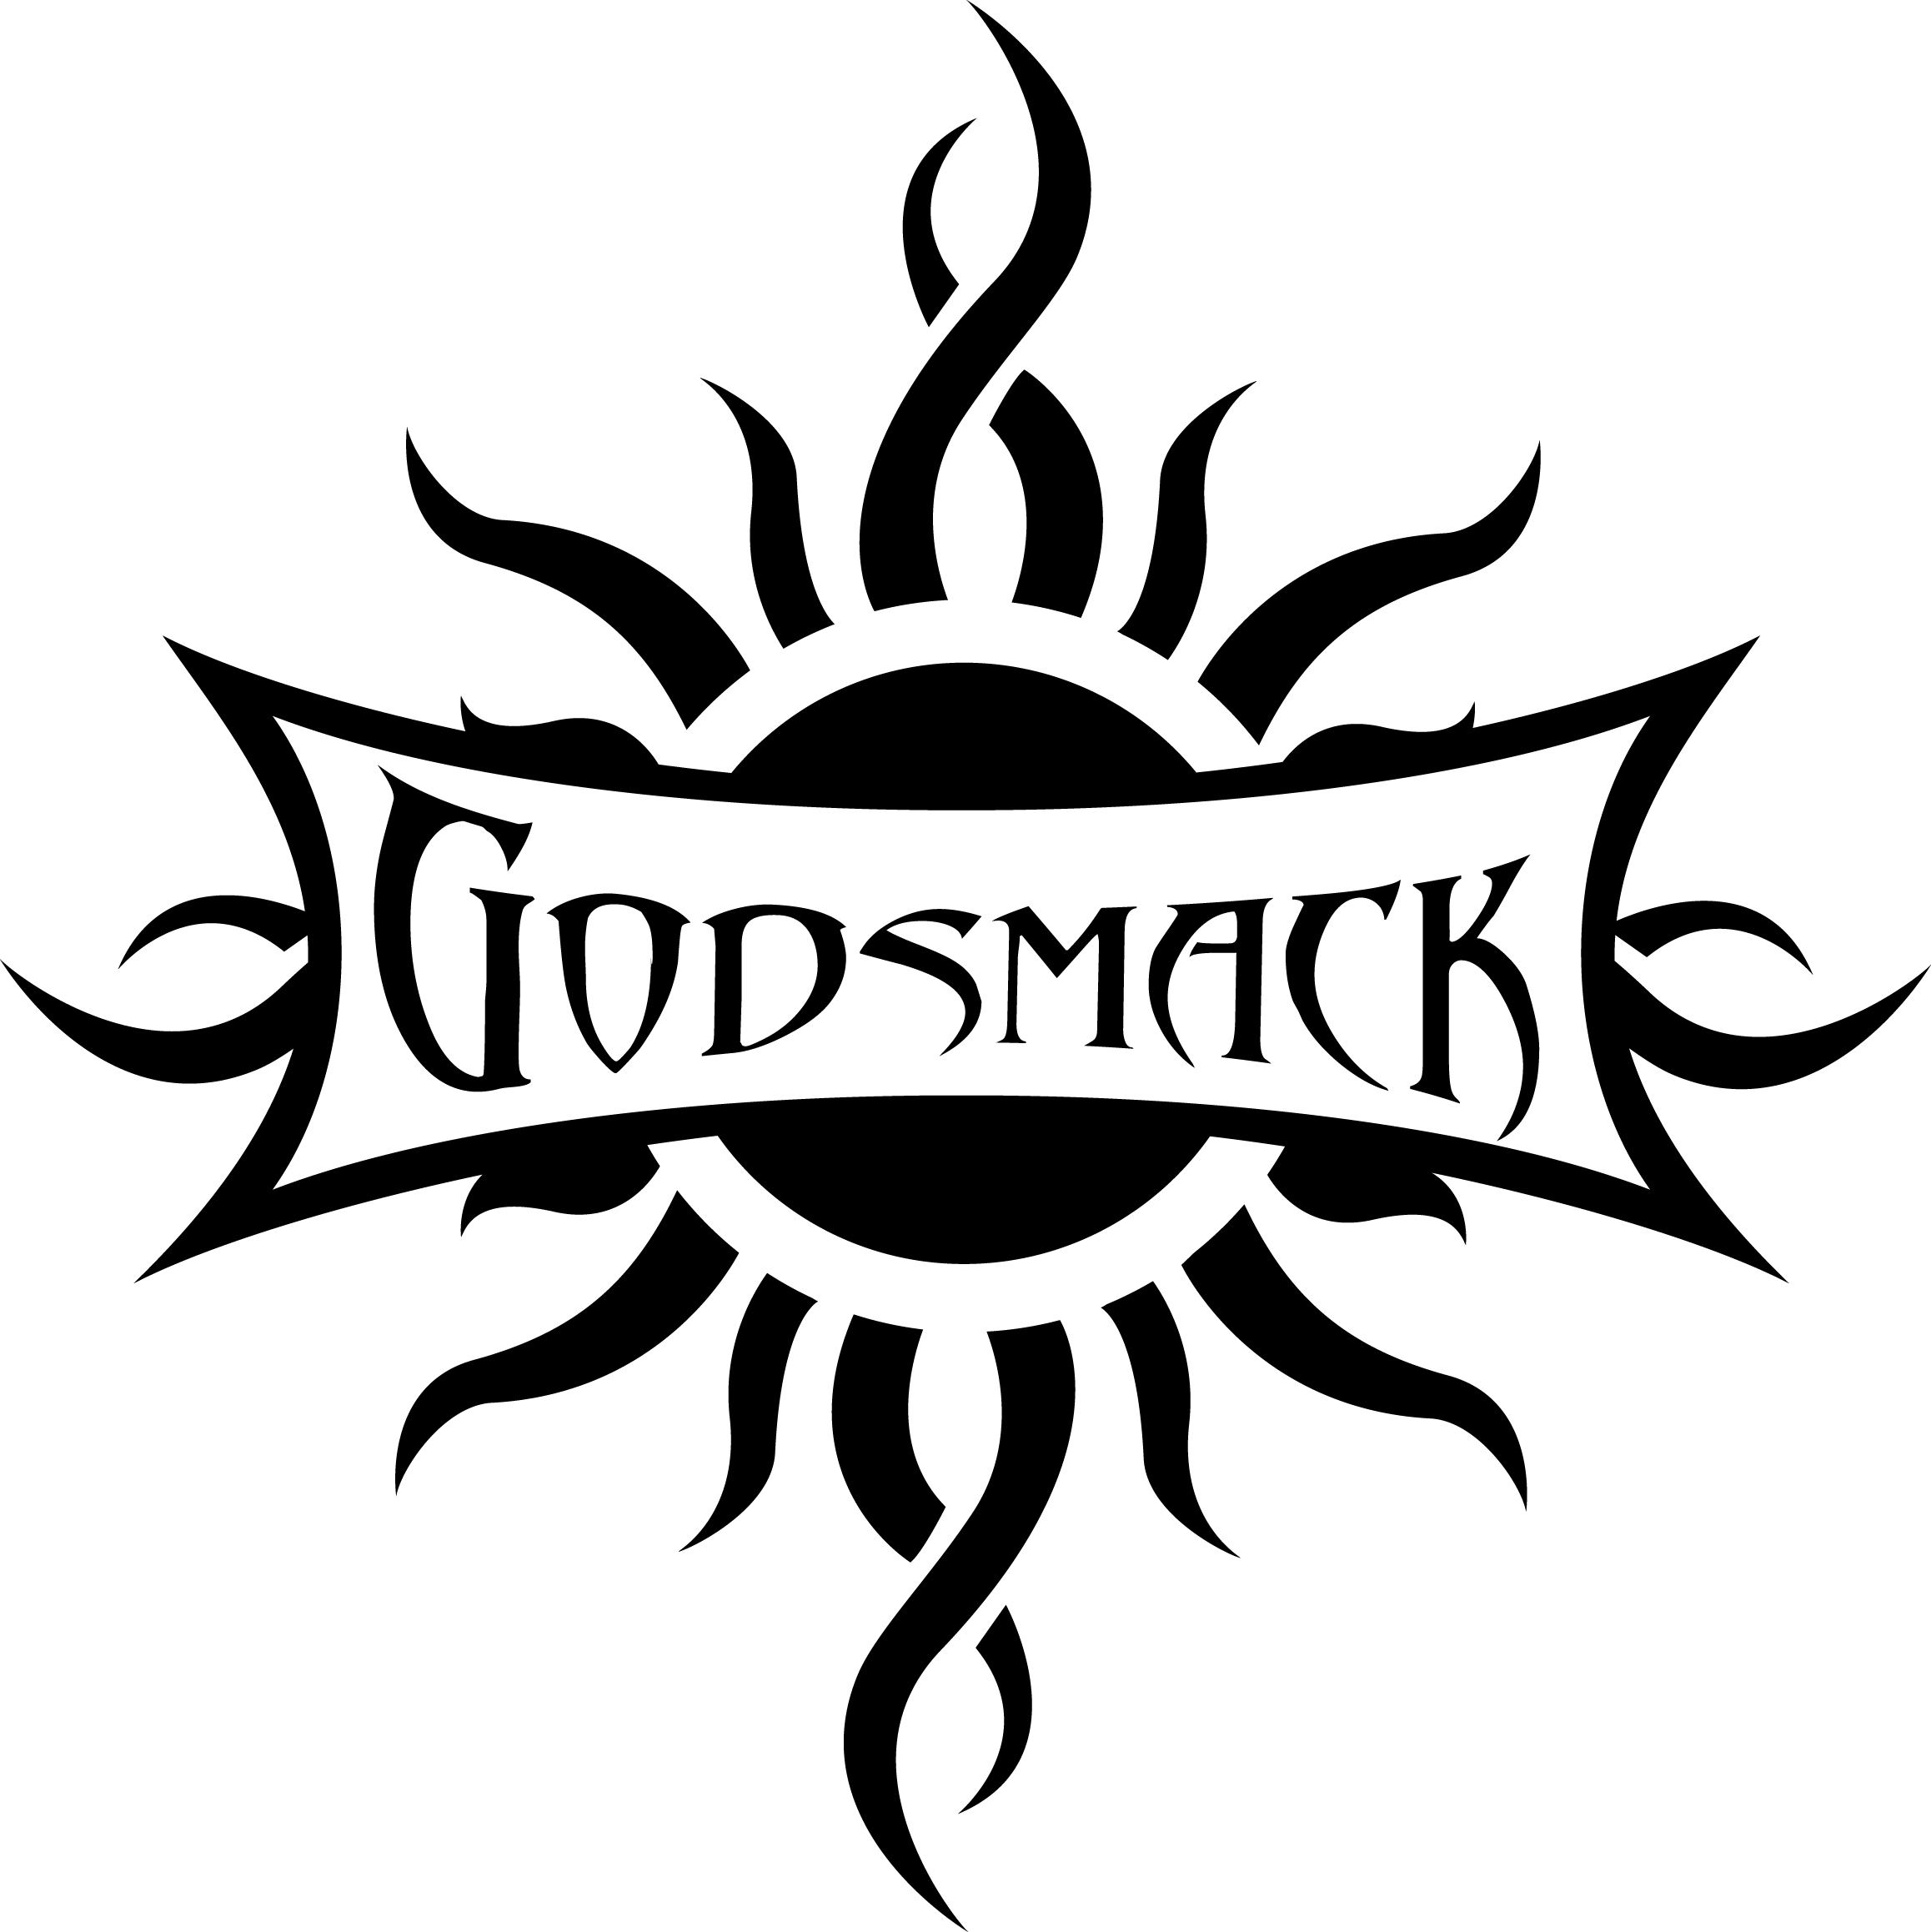 Godsmack #20